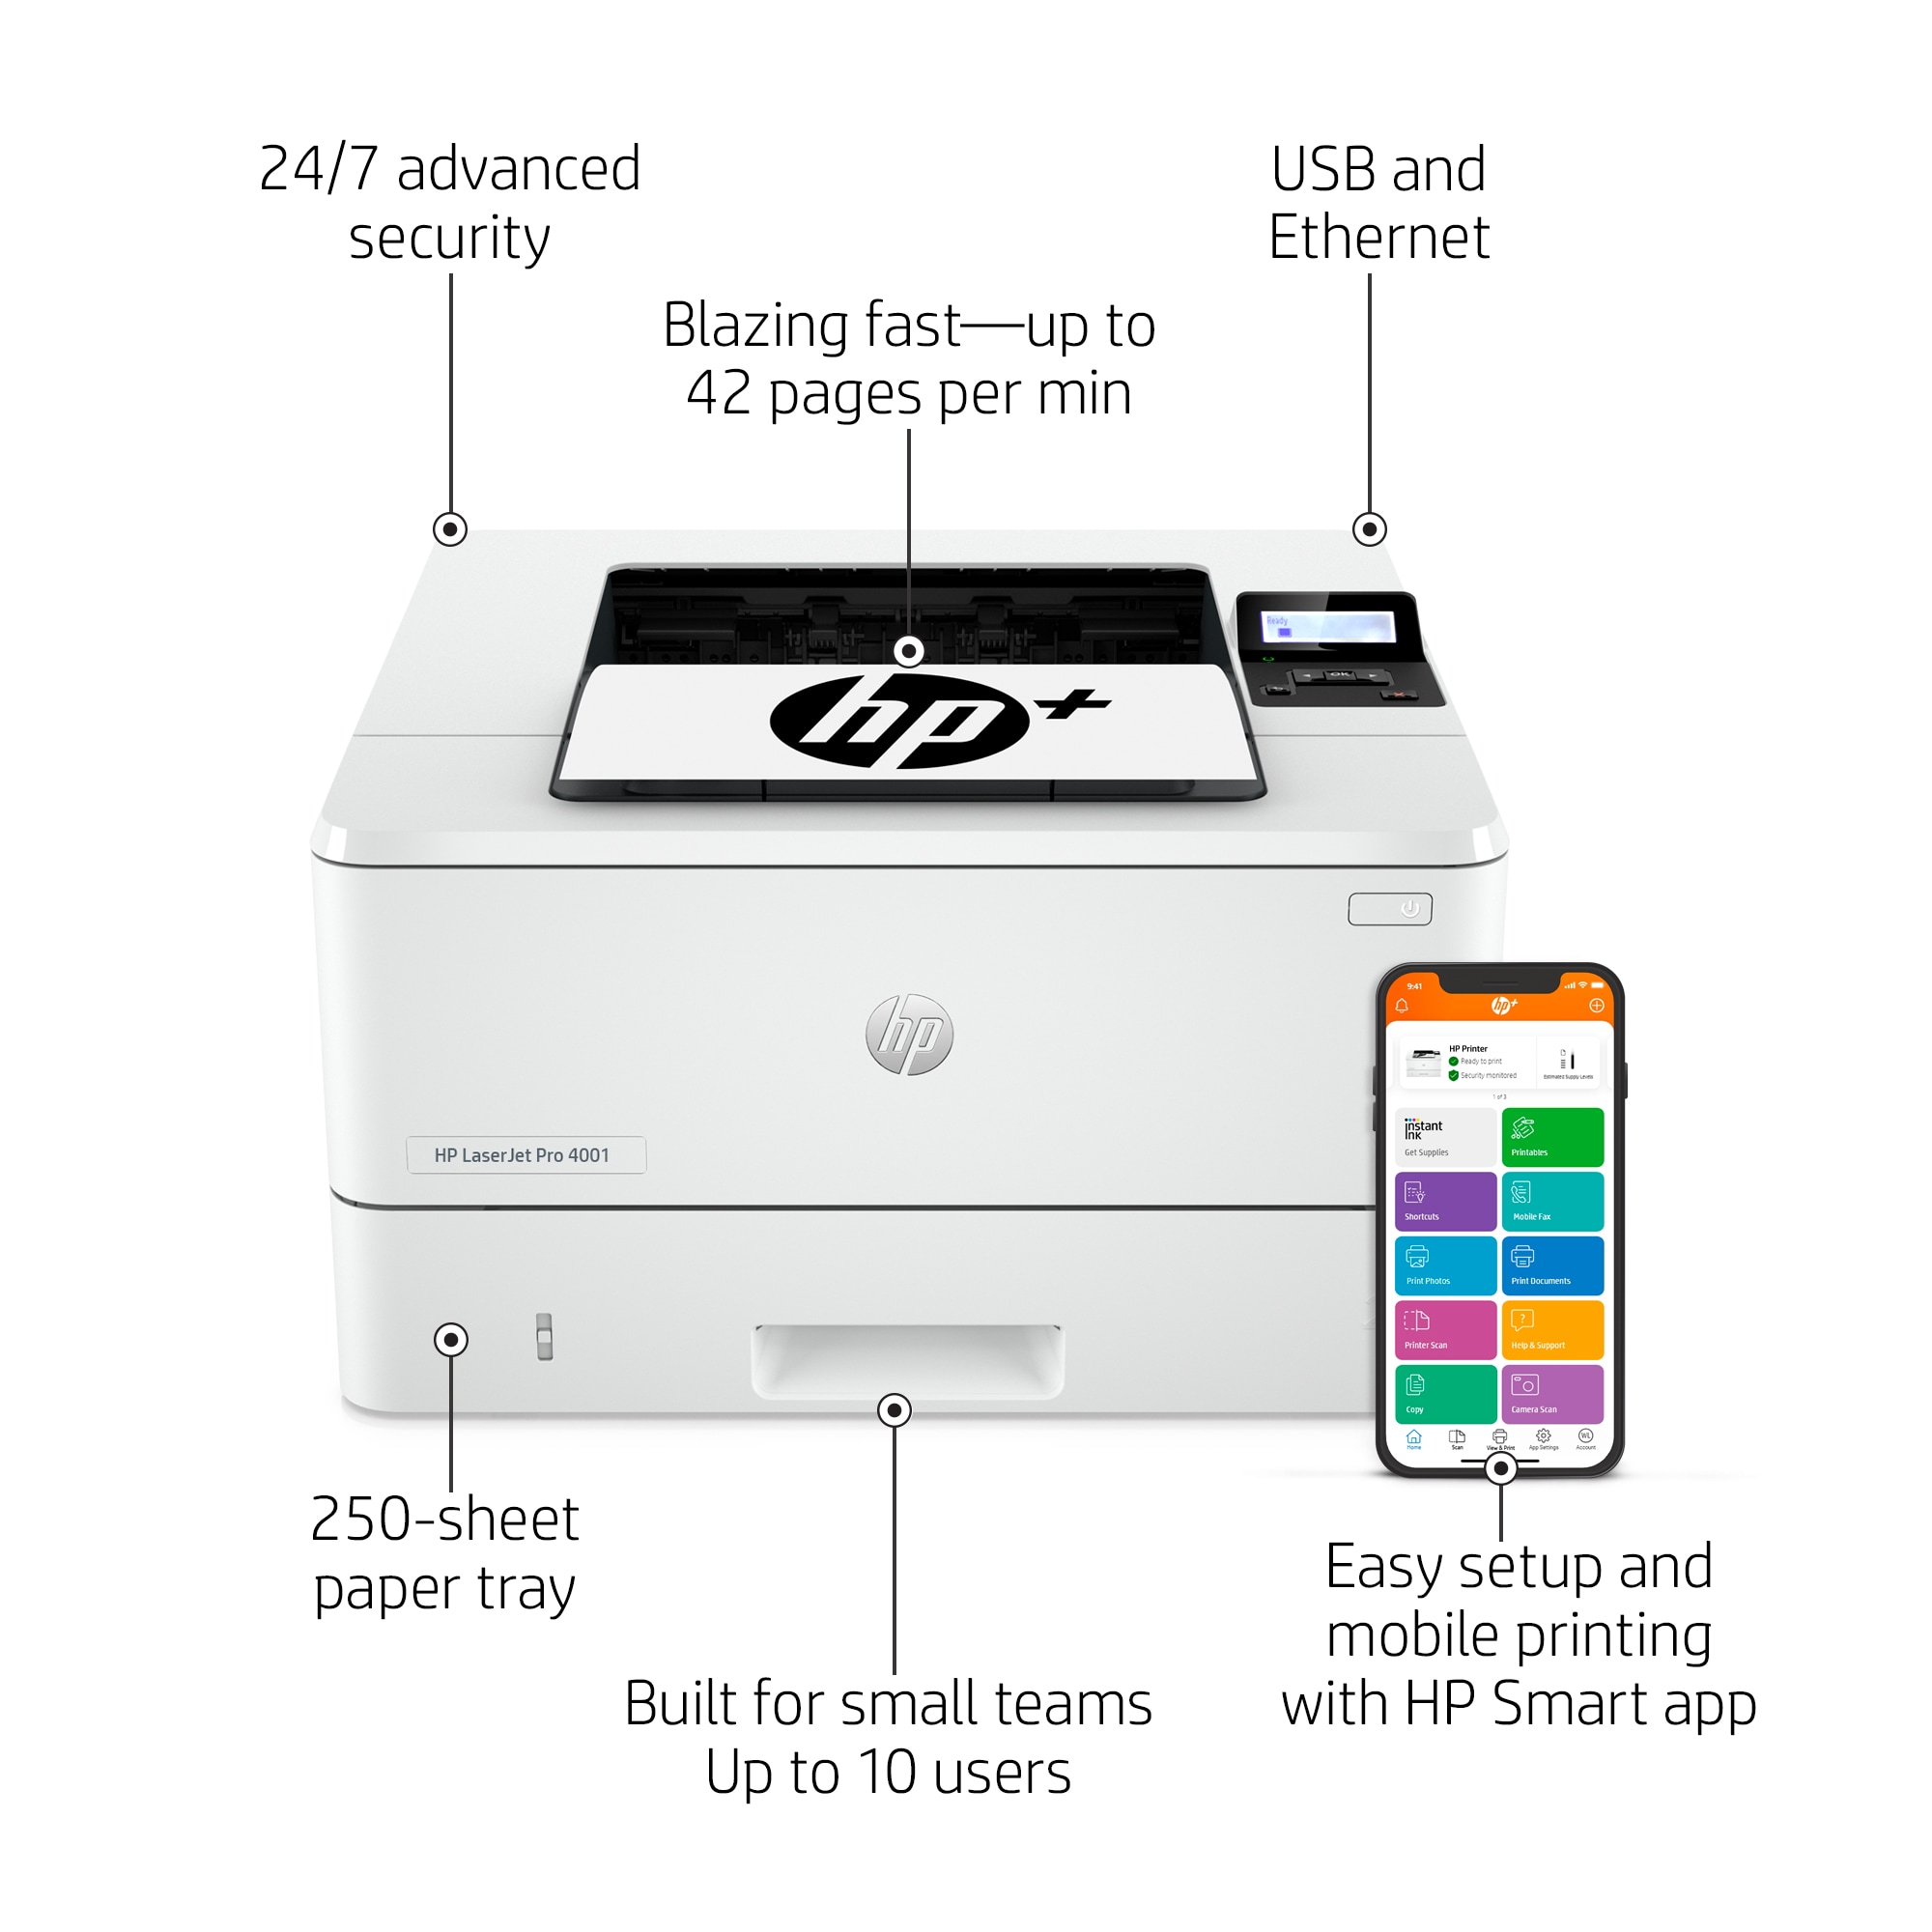 Sticker Sheet Printing, Universal Print & Copy